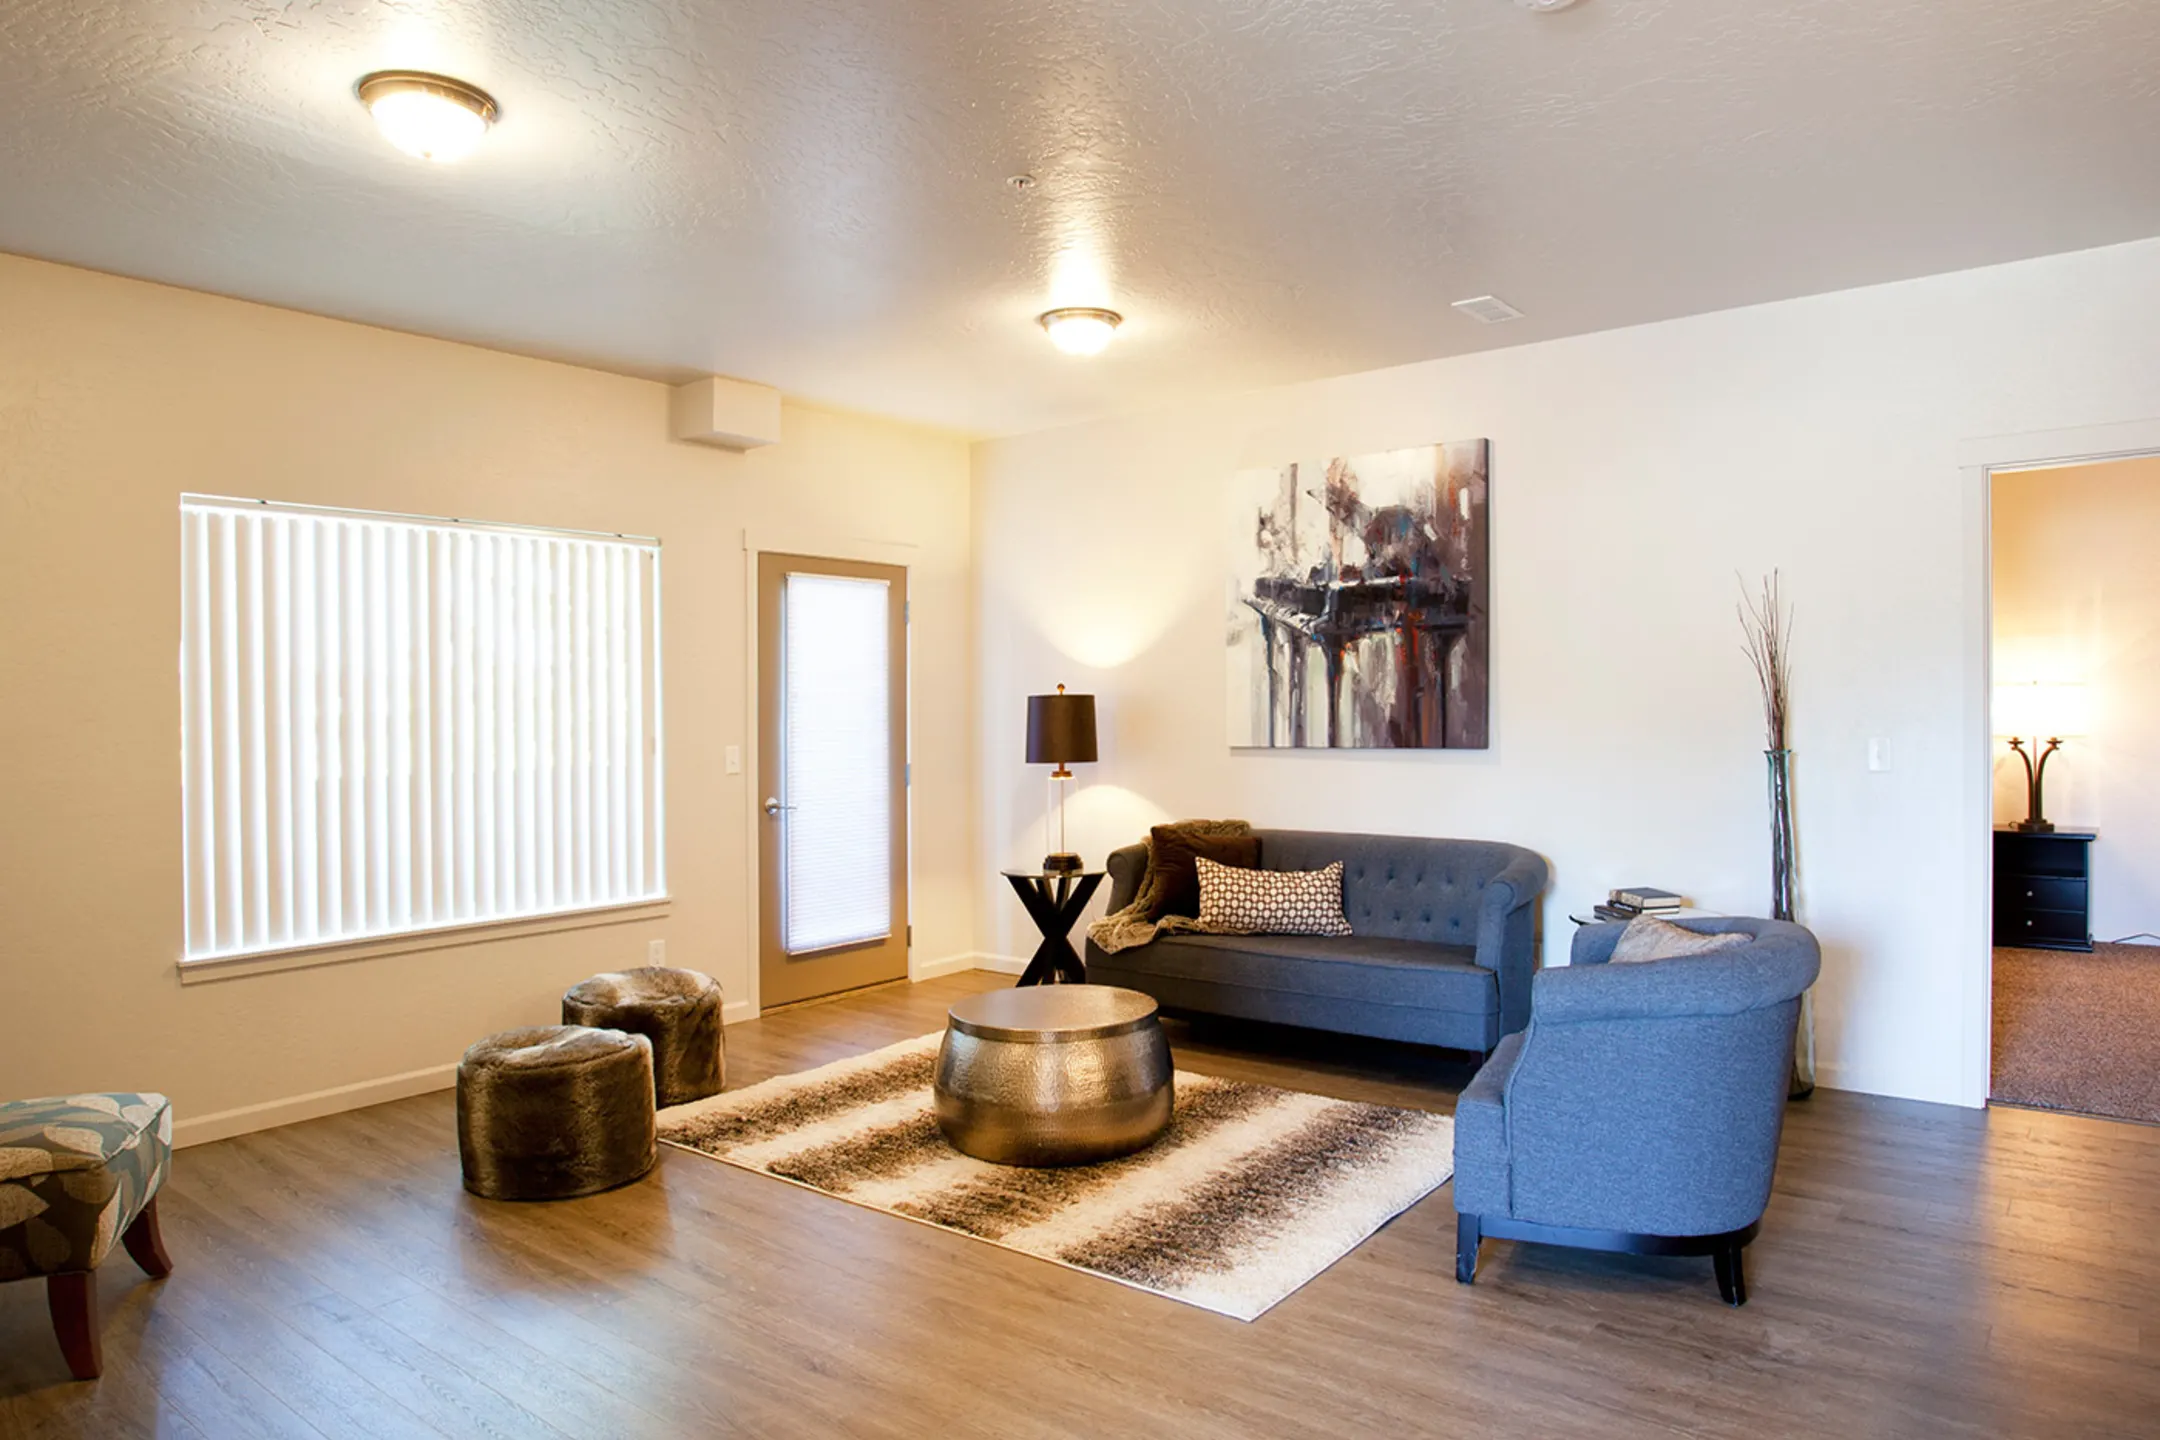 Living Room - Legacy Villas Apartments - Liberty Lake, WA